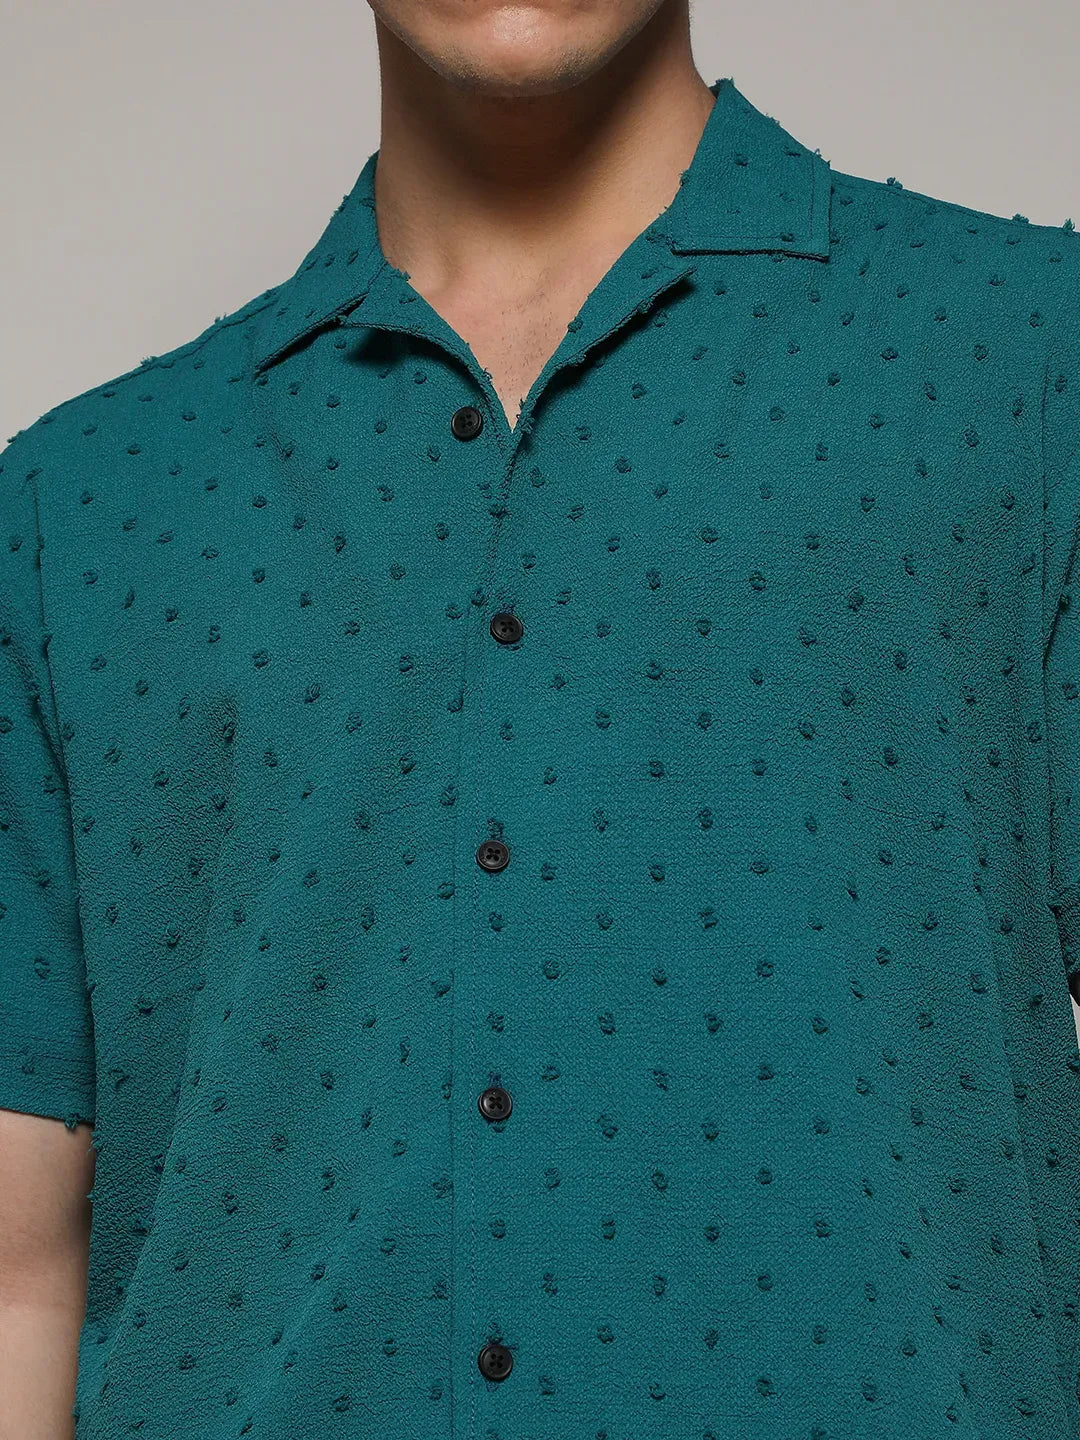 Men's Teal Green Self-Design Pom-Pom Shirt